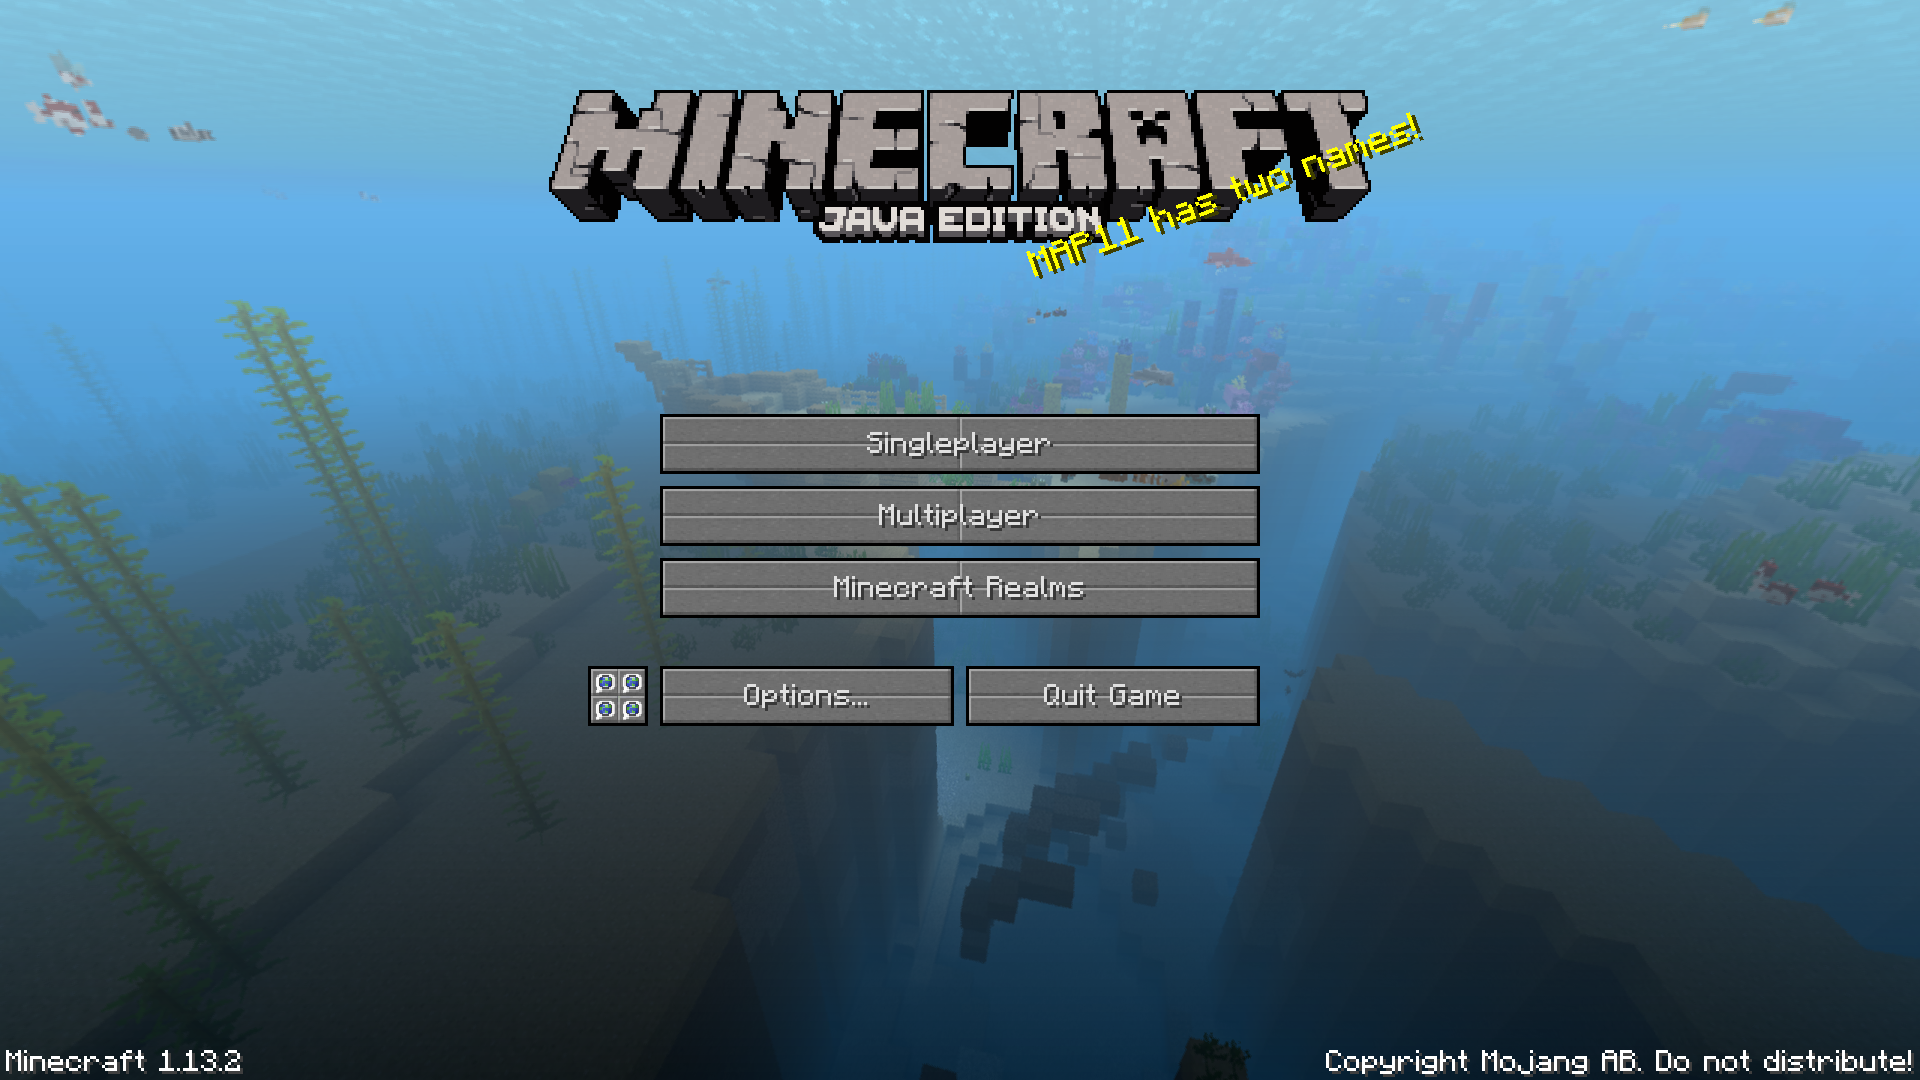 Minecraft Java Edition 1.16.5